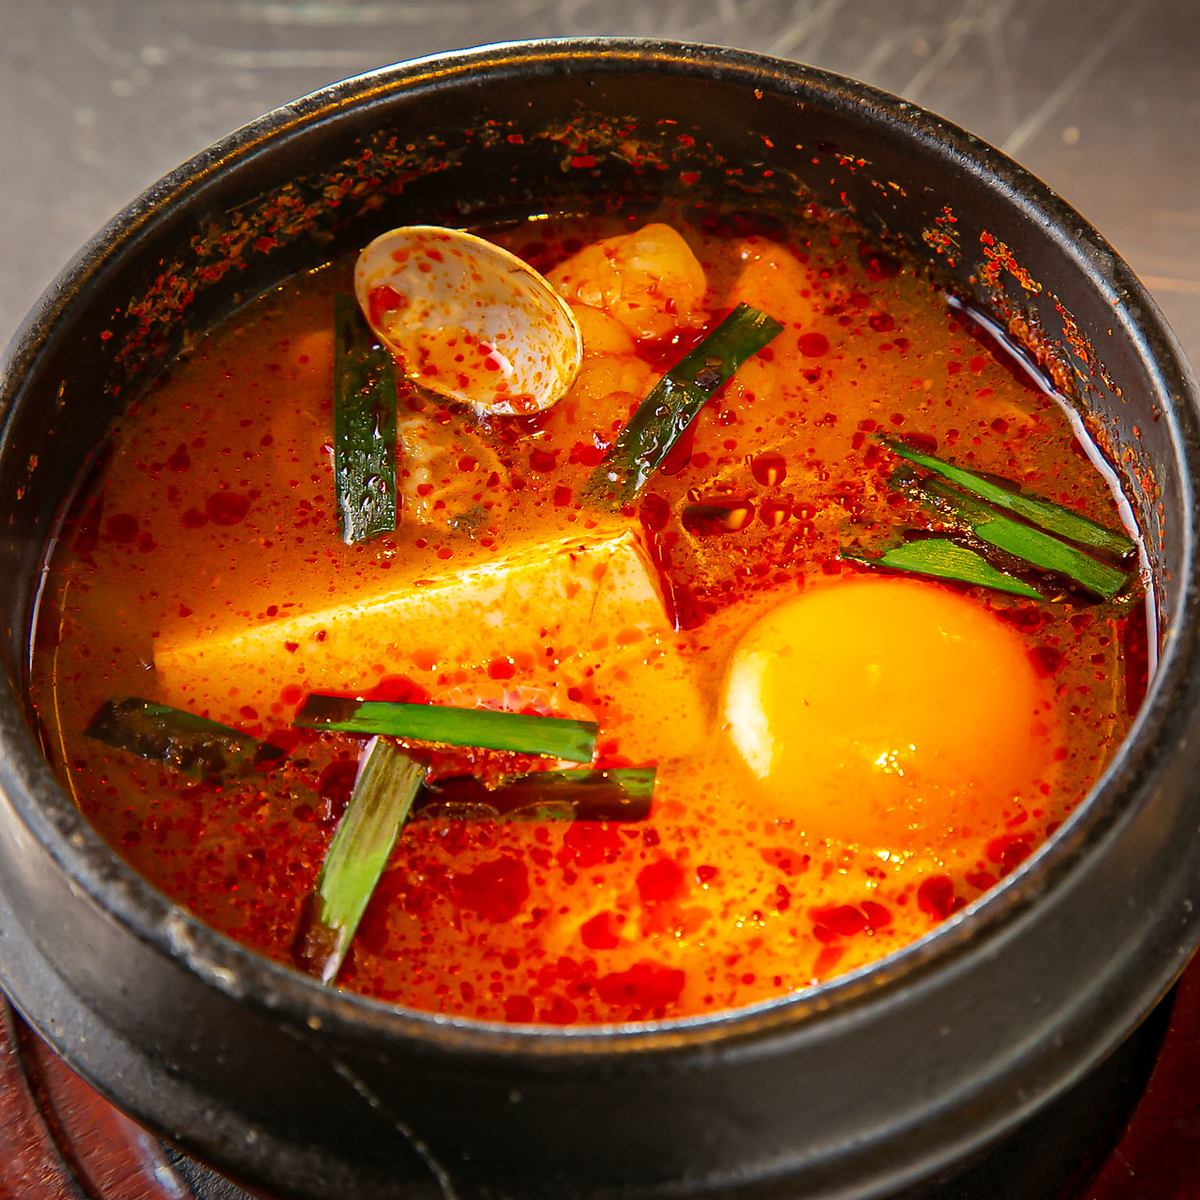 The popular sundubu jjigae and spicy soup are addictive.